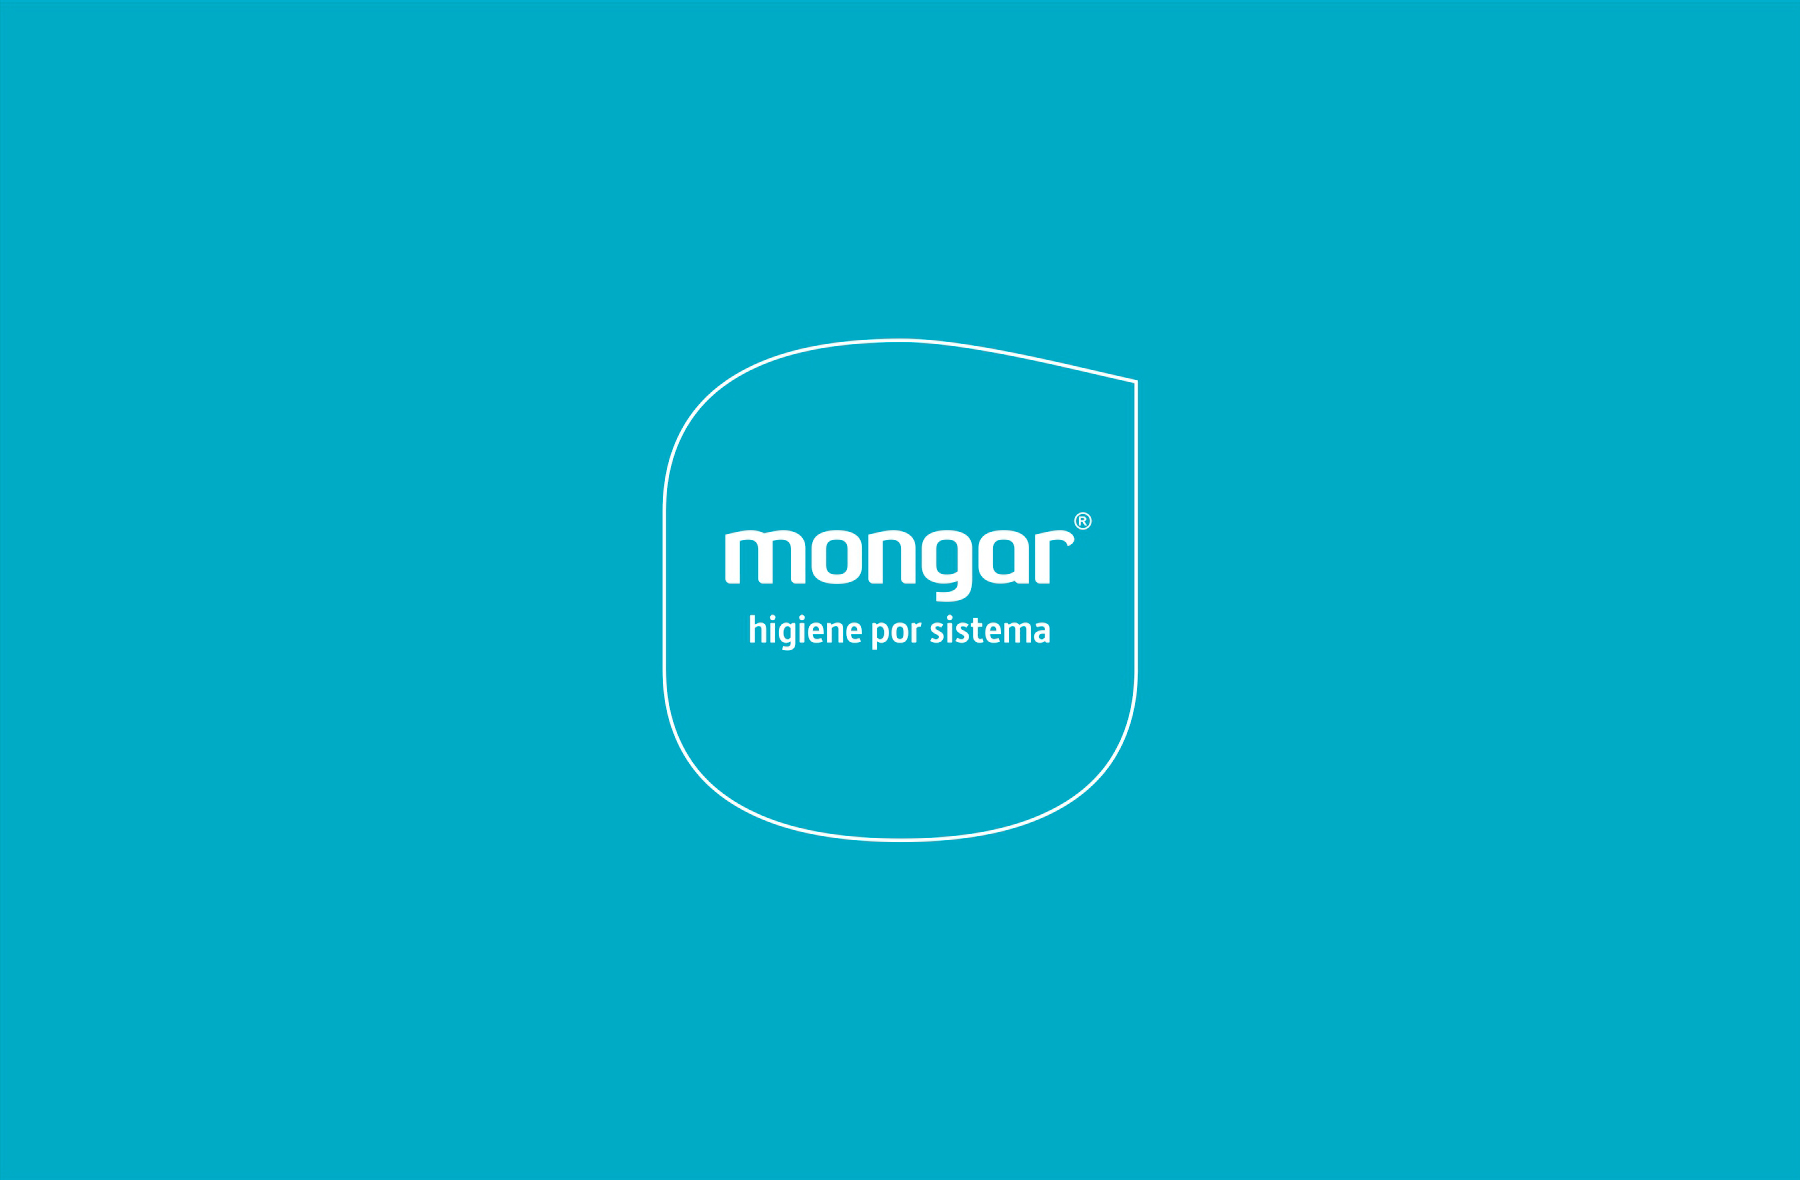 mongar higiene logotipo - javier real